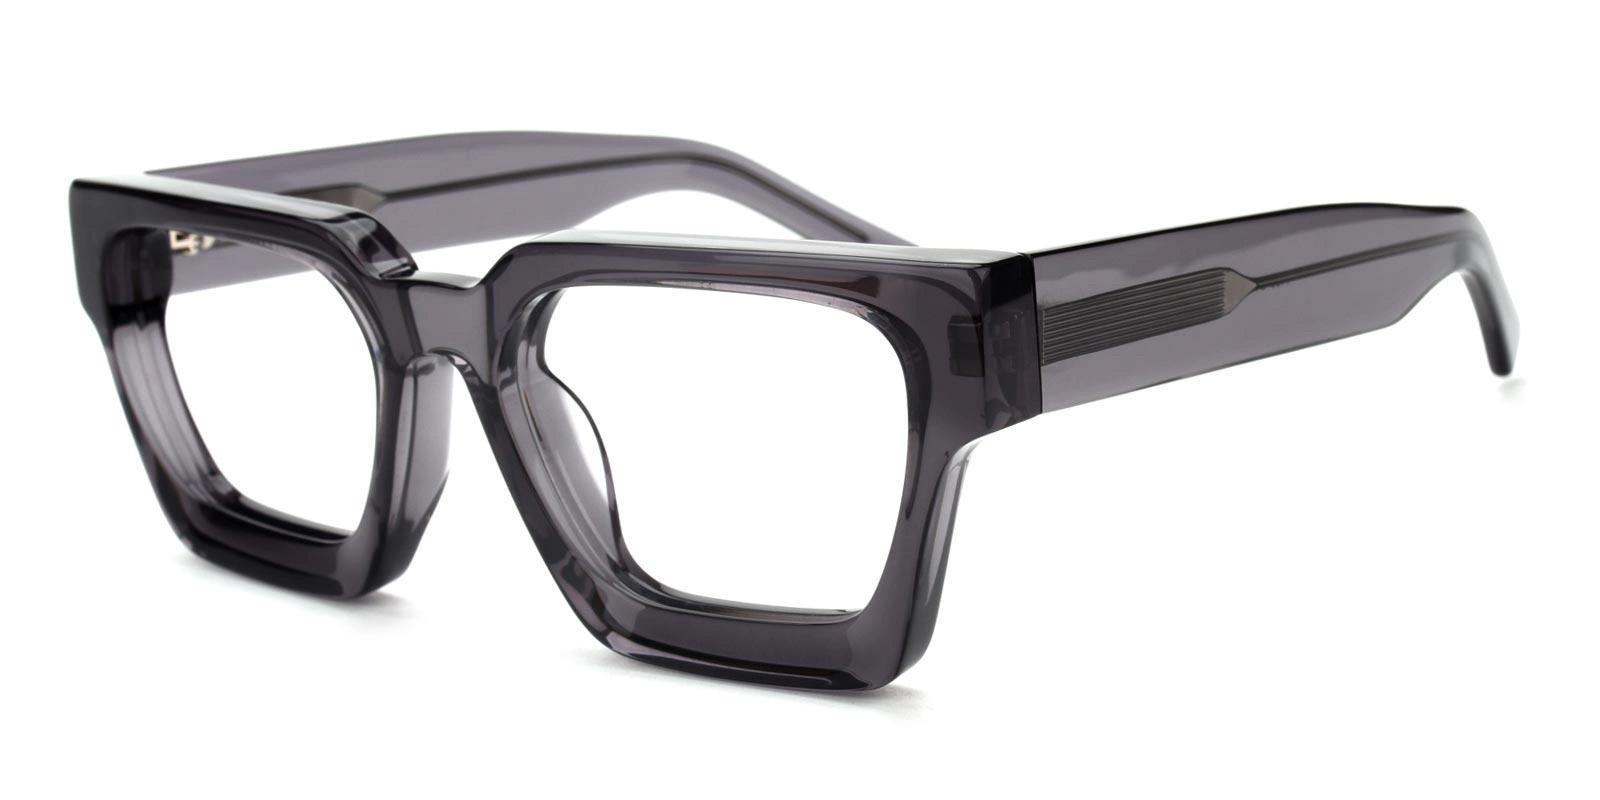 Stearary Gray Acetate Eyeglasses , UniversalBridgeFit Frames from ABBE Glasses